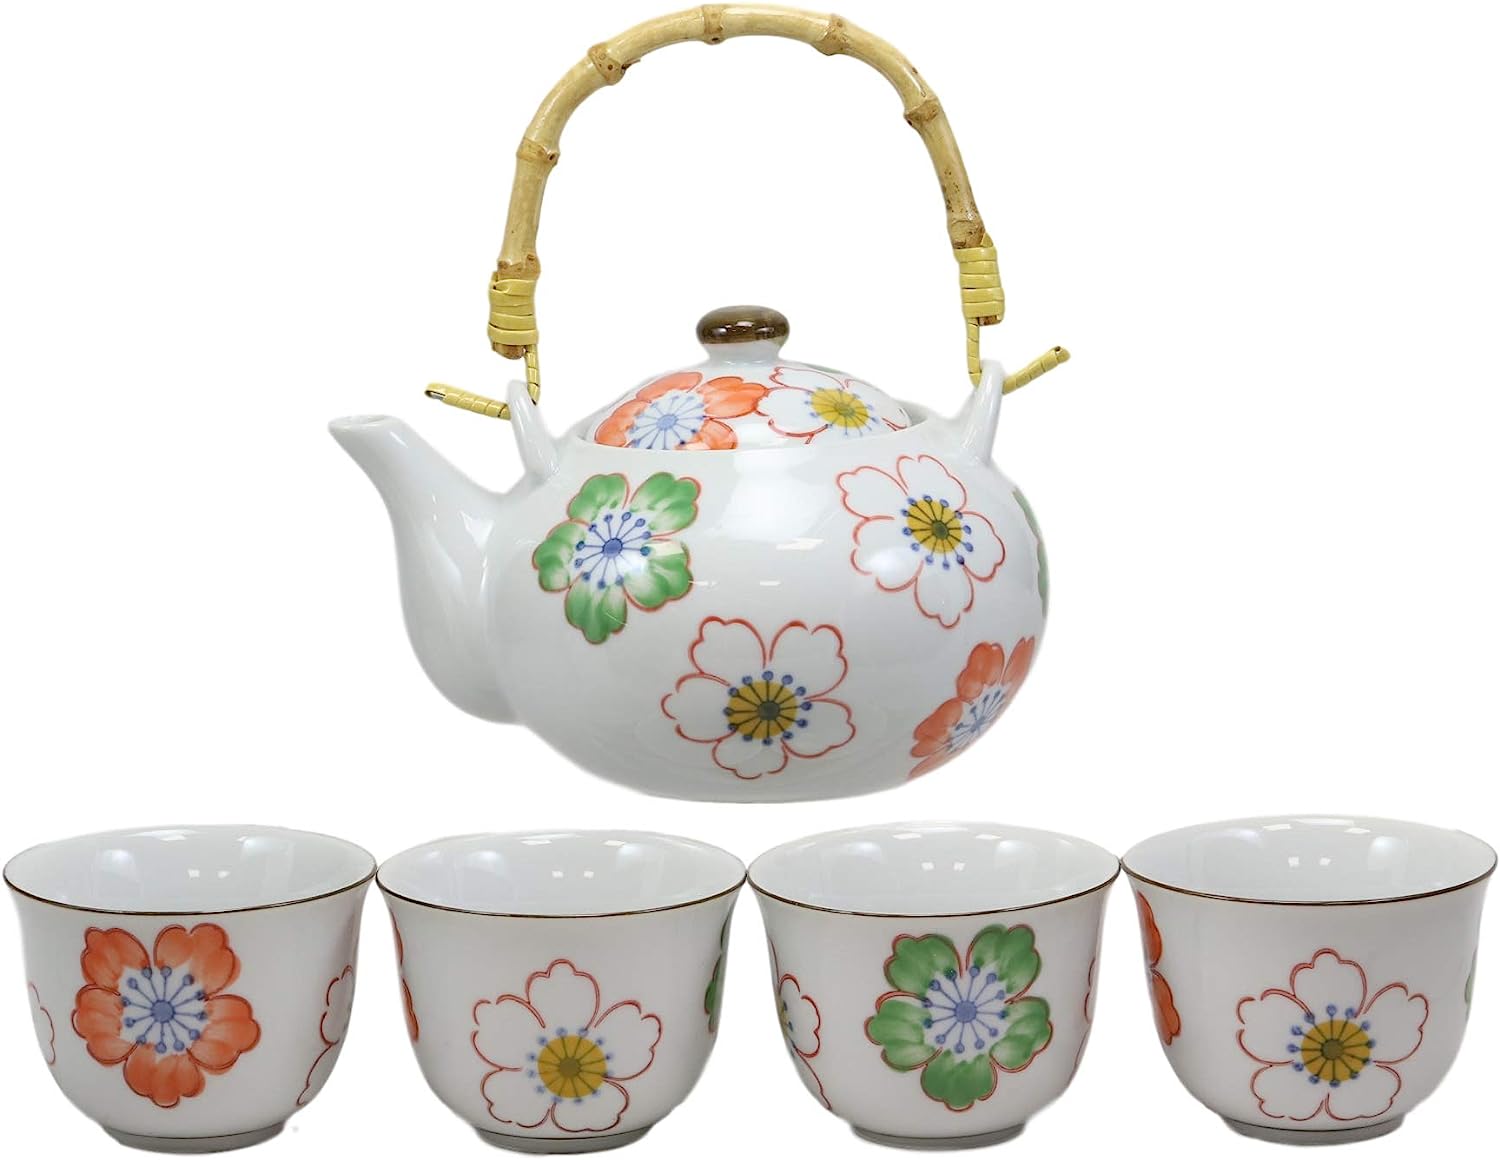 Ebros Gift Tea Pot and Cups. 22-Ounce